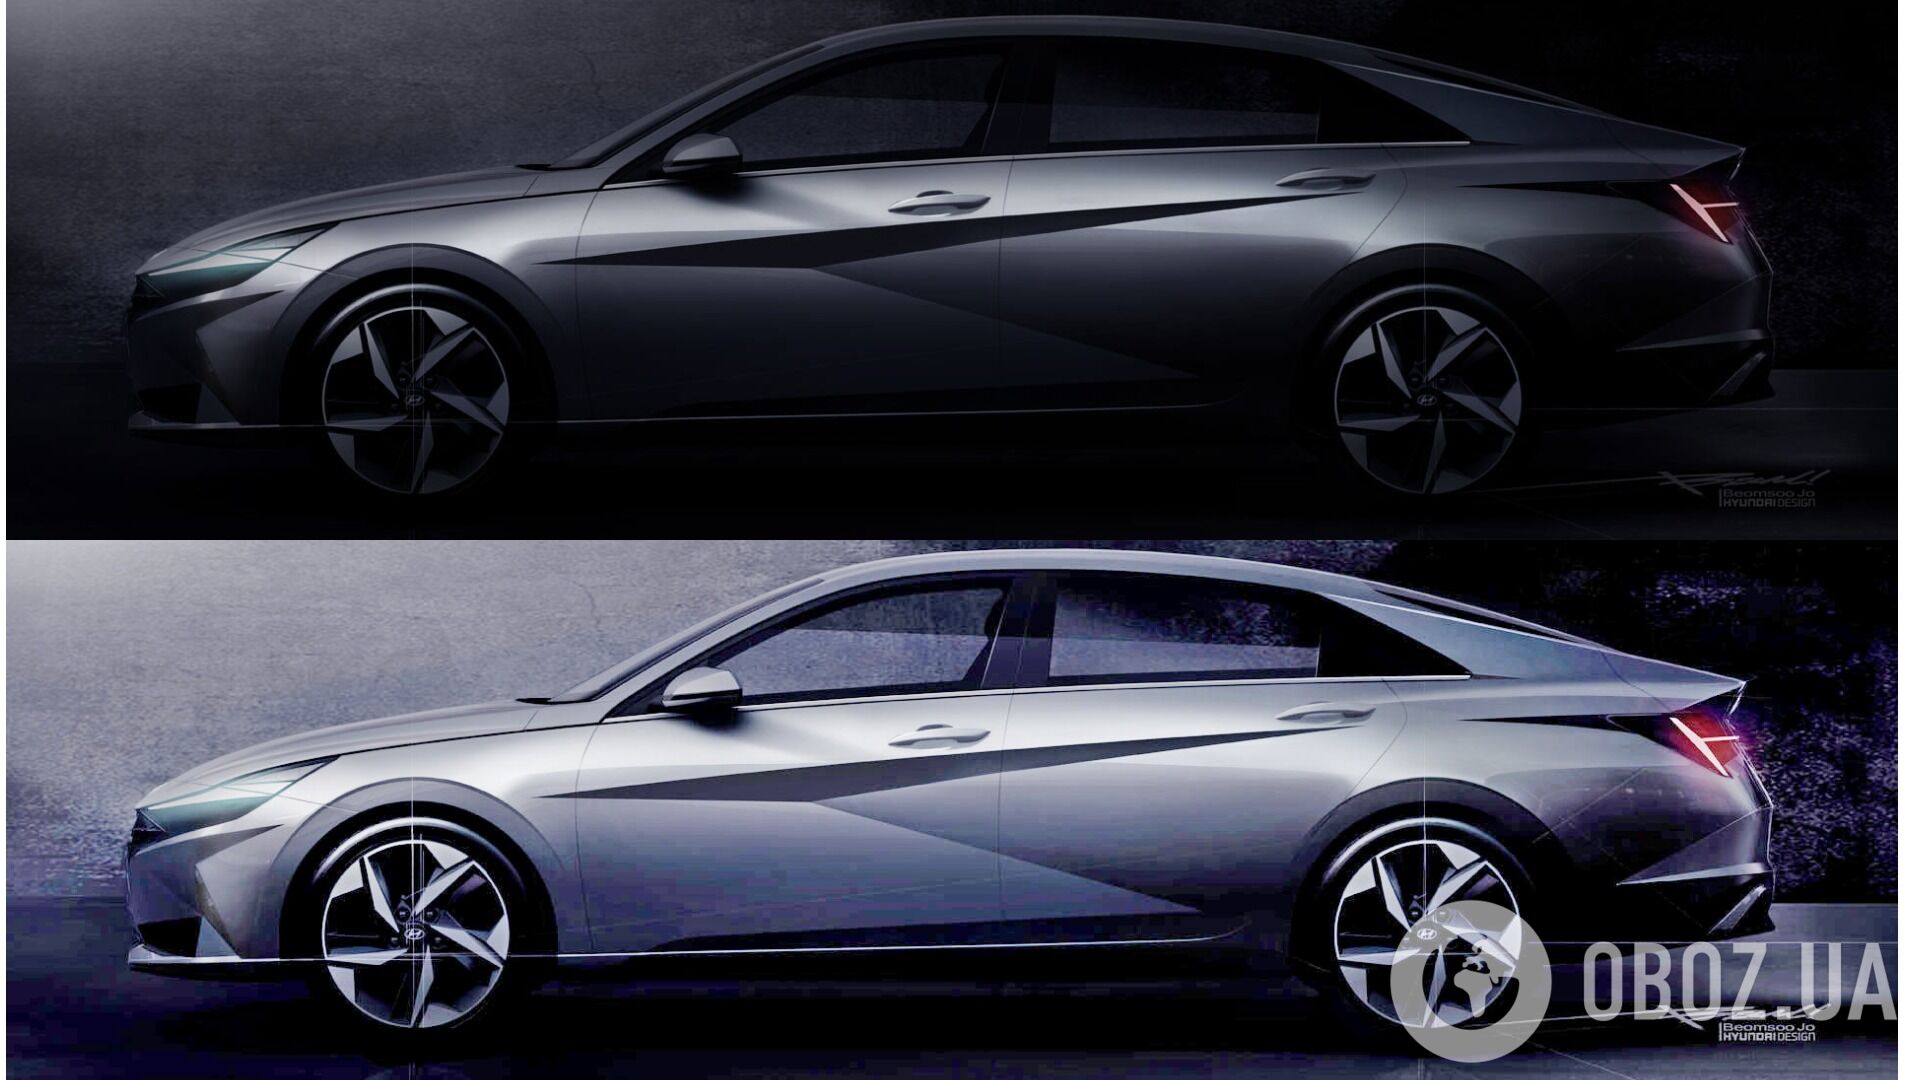 Ми обробили зображення Hyundai Elantra 2021, щоб побачити більше – вигляд нового седана більше не секрет!